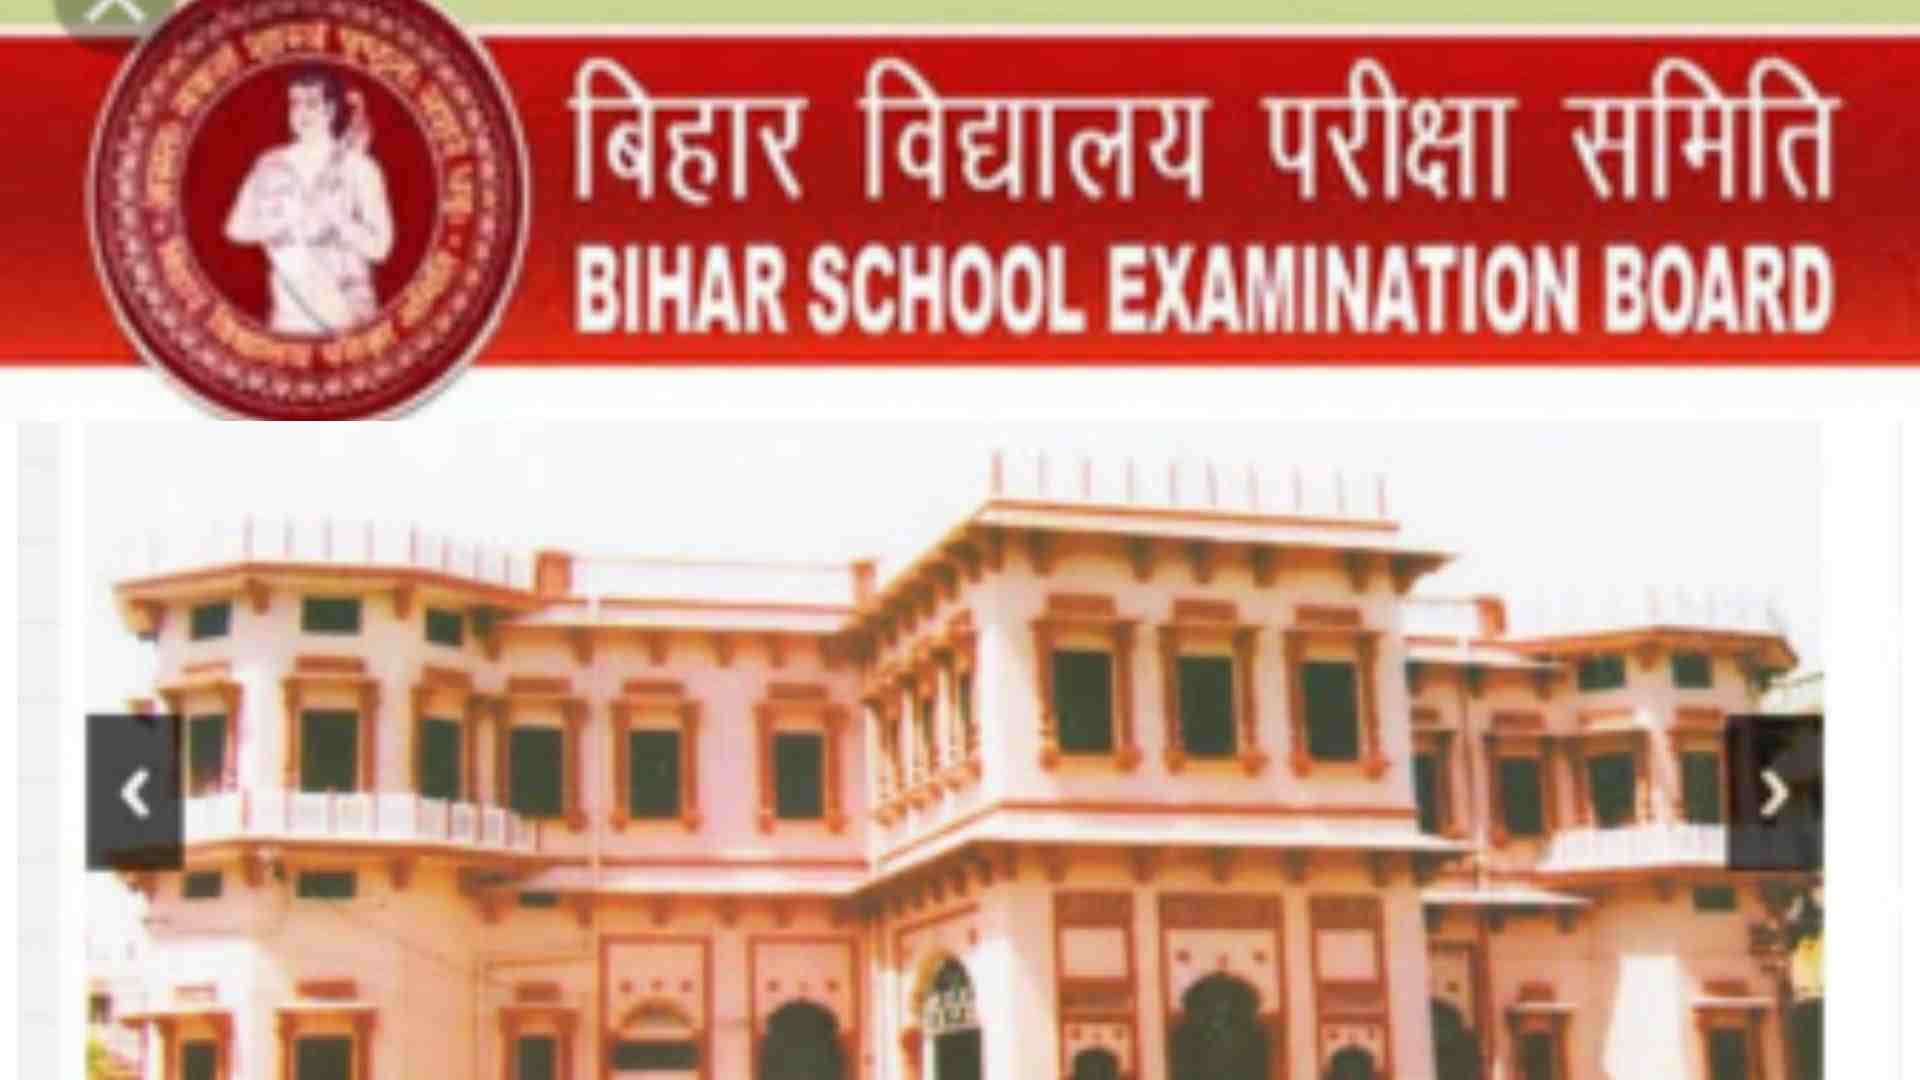 Bihar Board Inter Admission